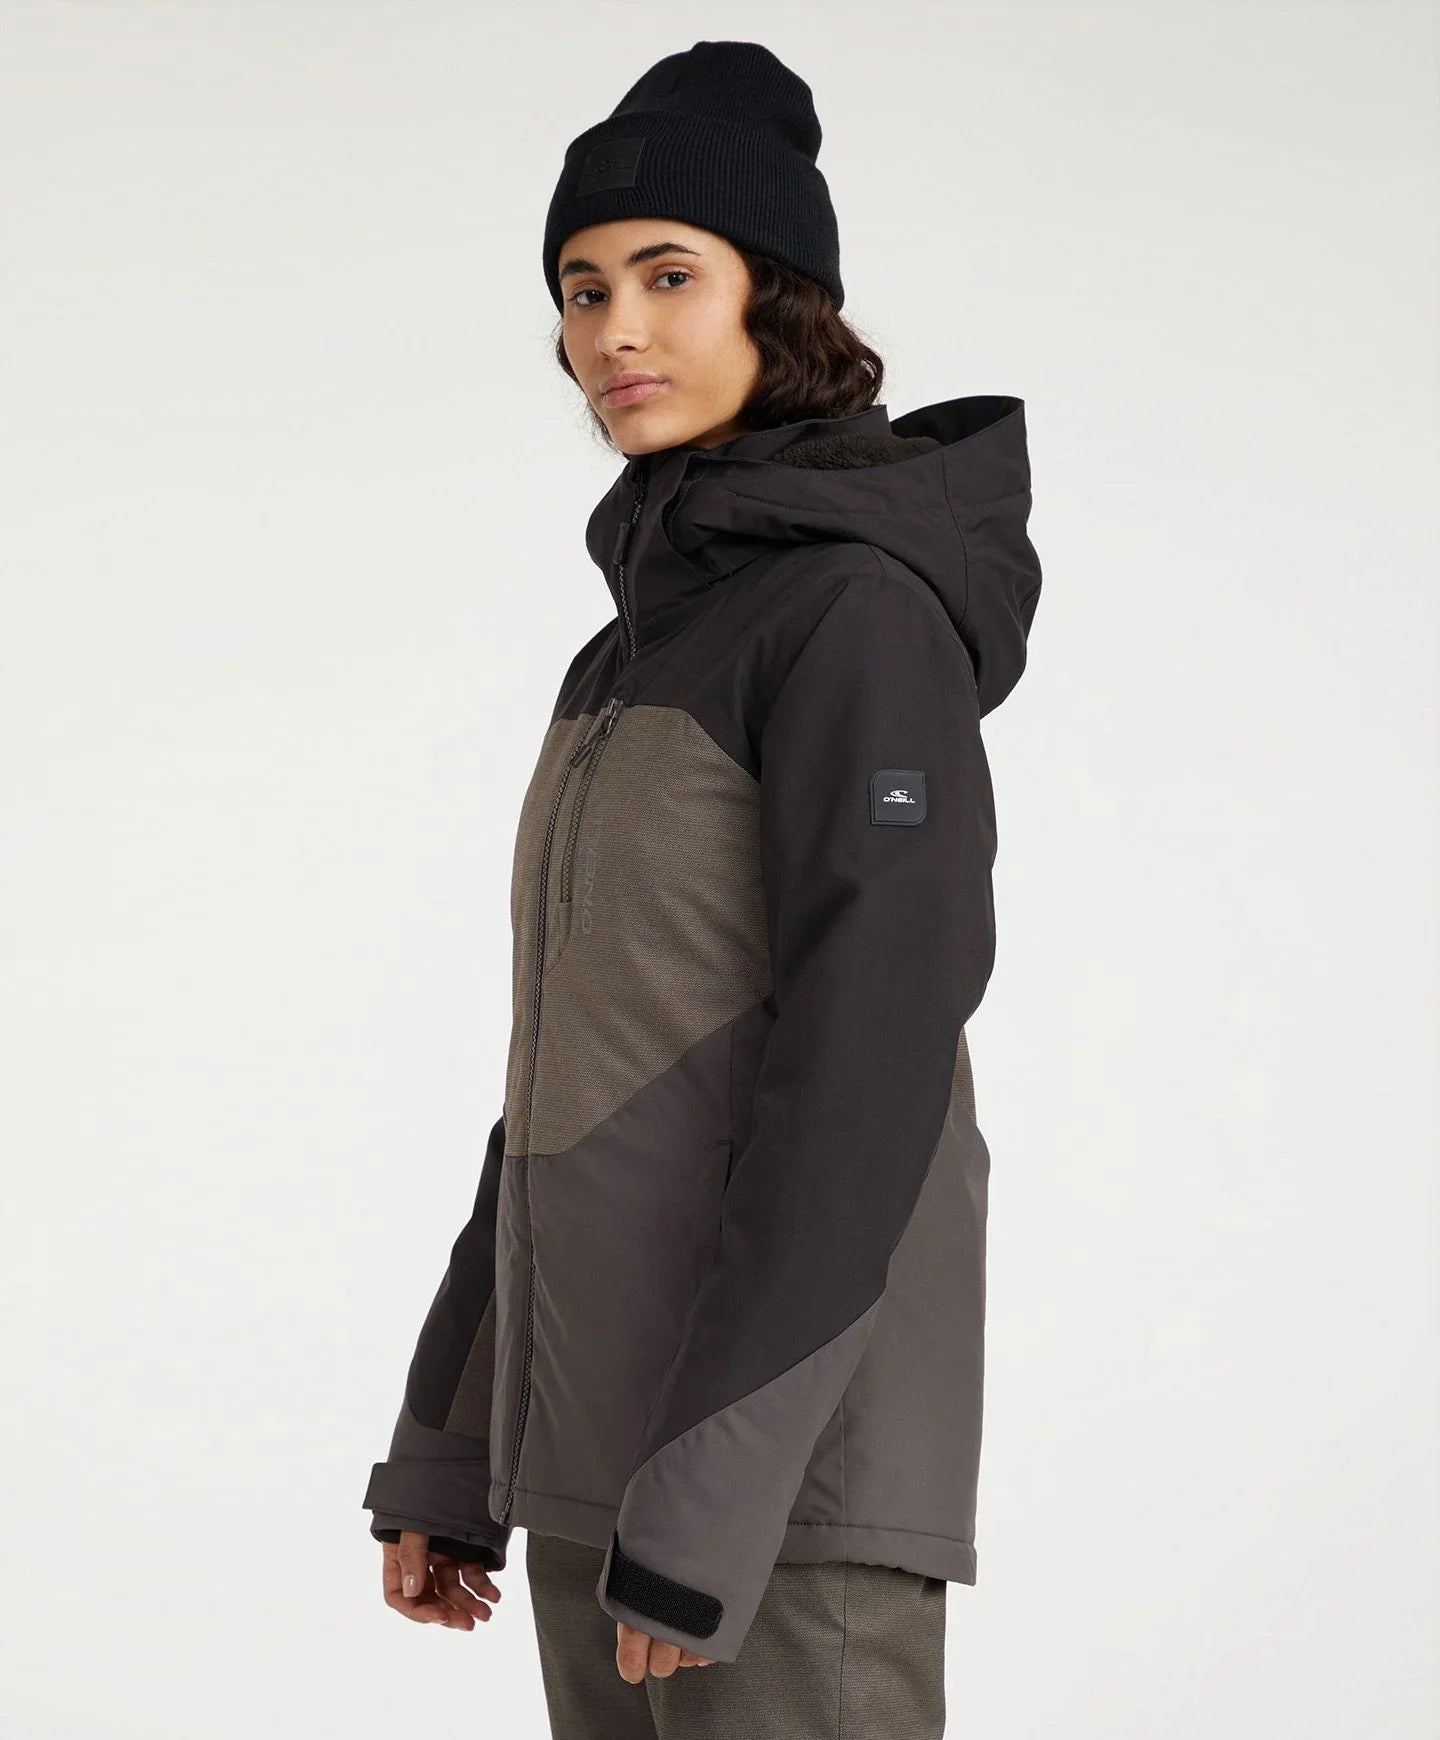 O'Neill Women's Carbonite Jacket - Black Out Women's Snow Jackets - Trojan Wake Ski Snow